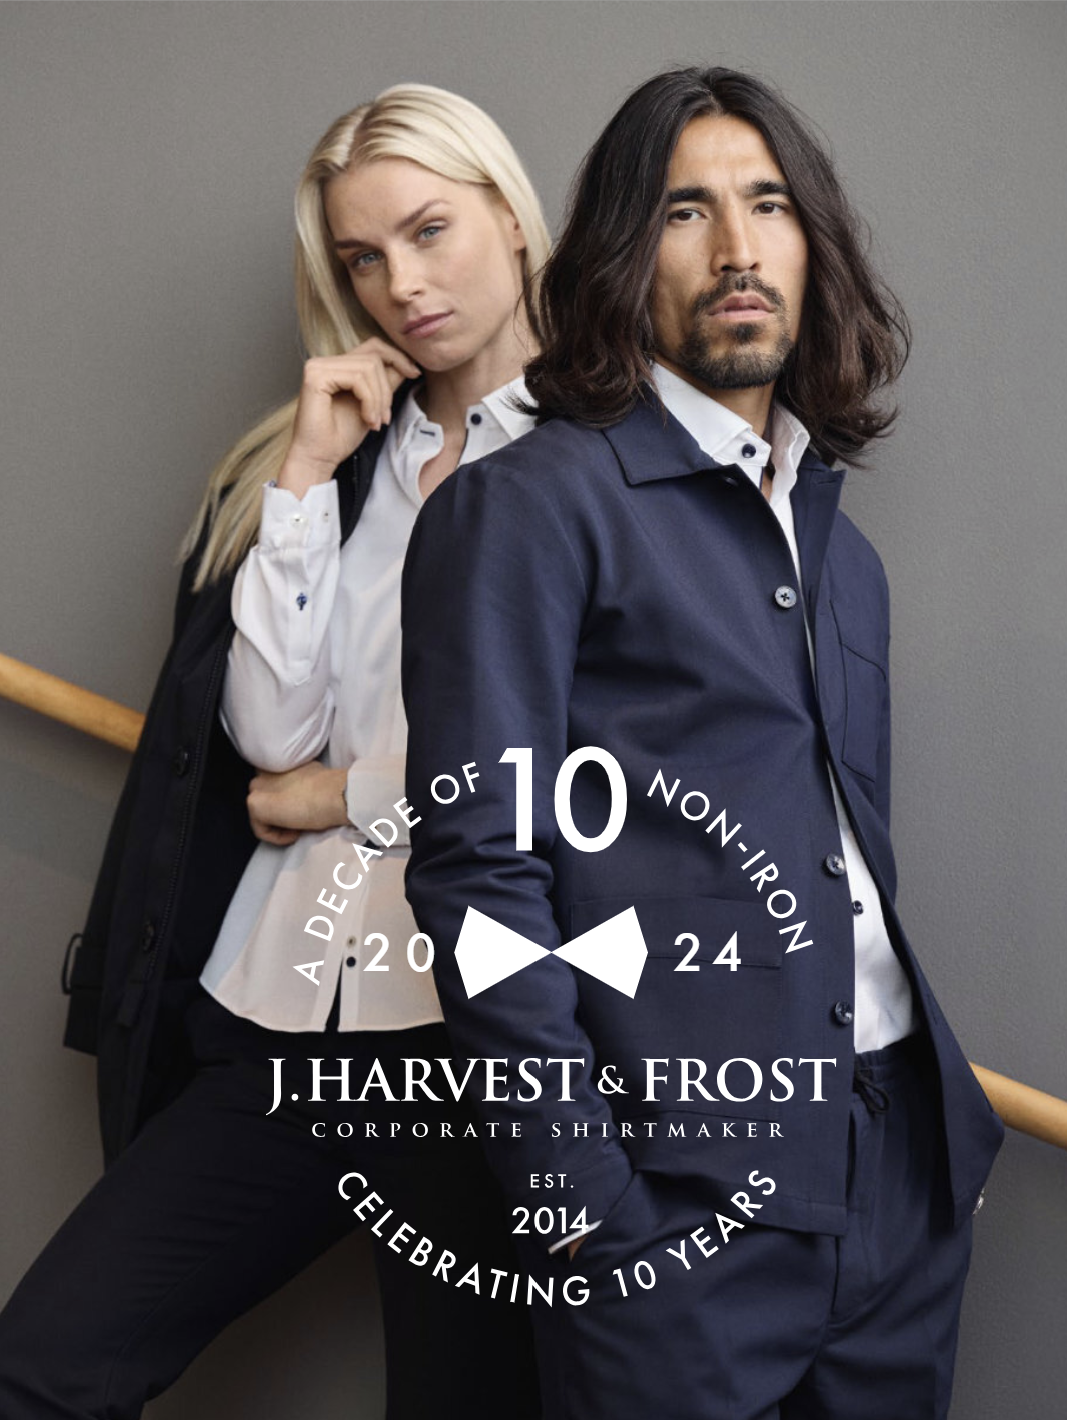 Zakelijke kleding, publiciteitskleding, shirt, hemd, vest, jas, blazer, kwaliteit, corporate wear, apparel, feestkleding van James Harvest & Frost